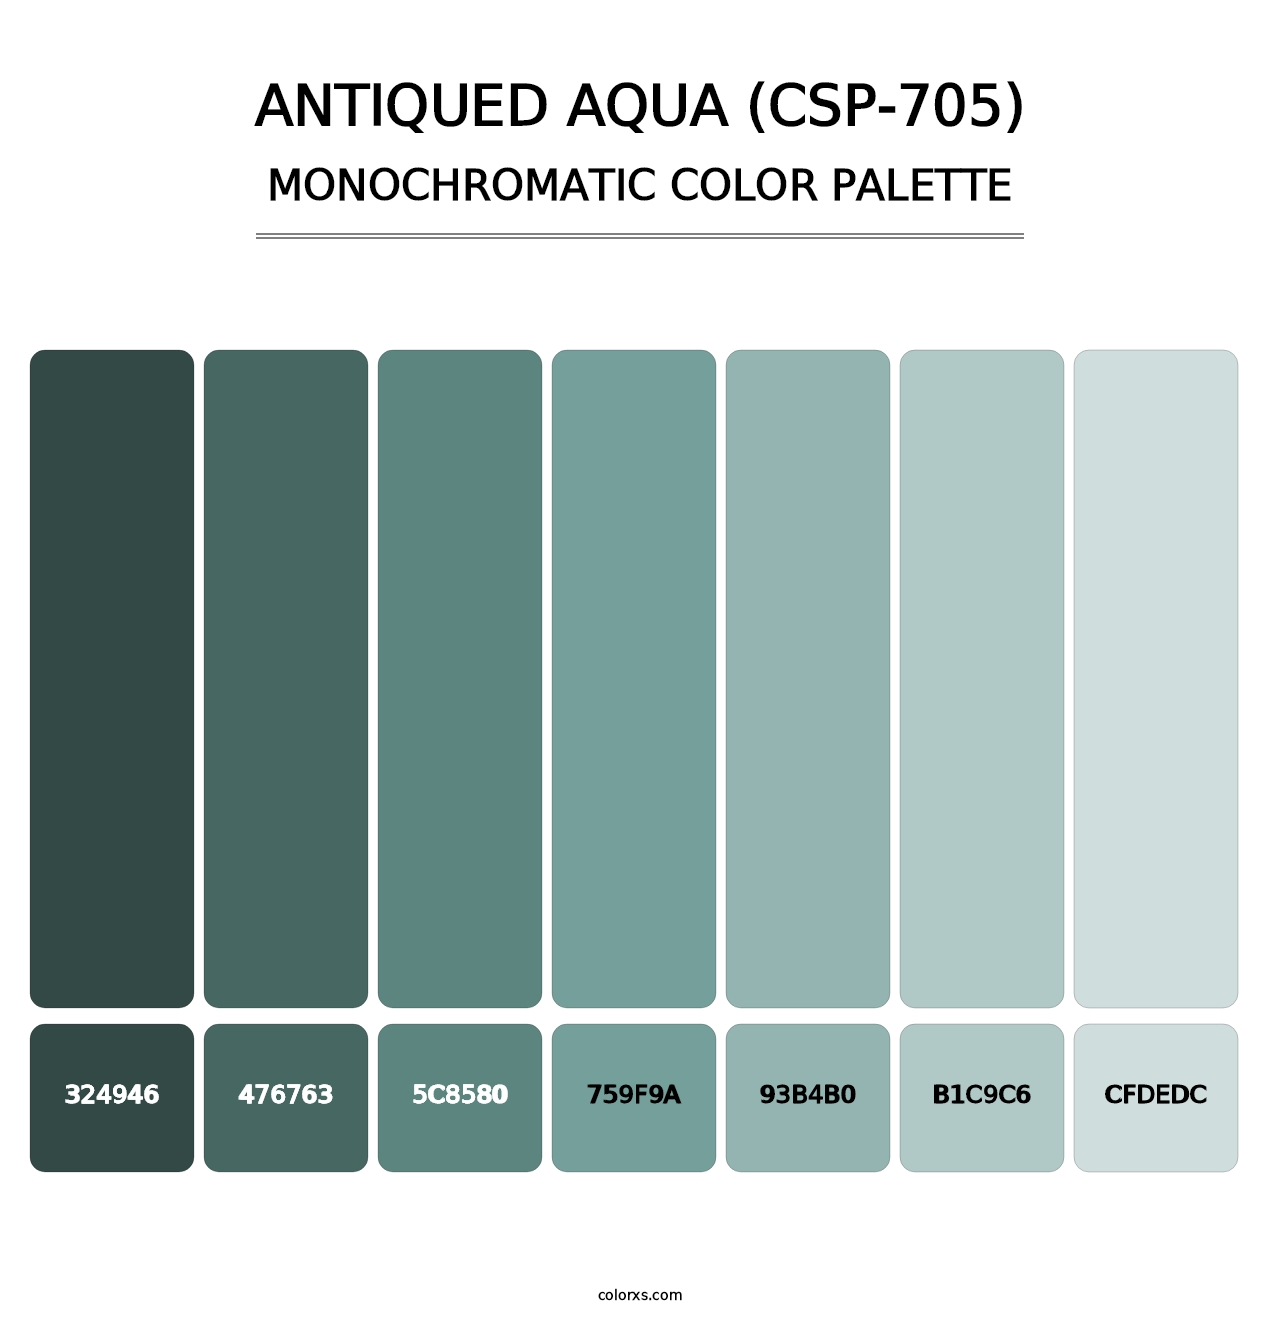 Antiqued Aqua (CSP-705) - Monochromatic Color Palette